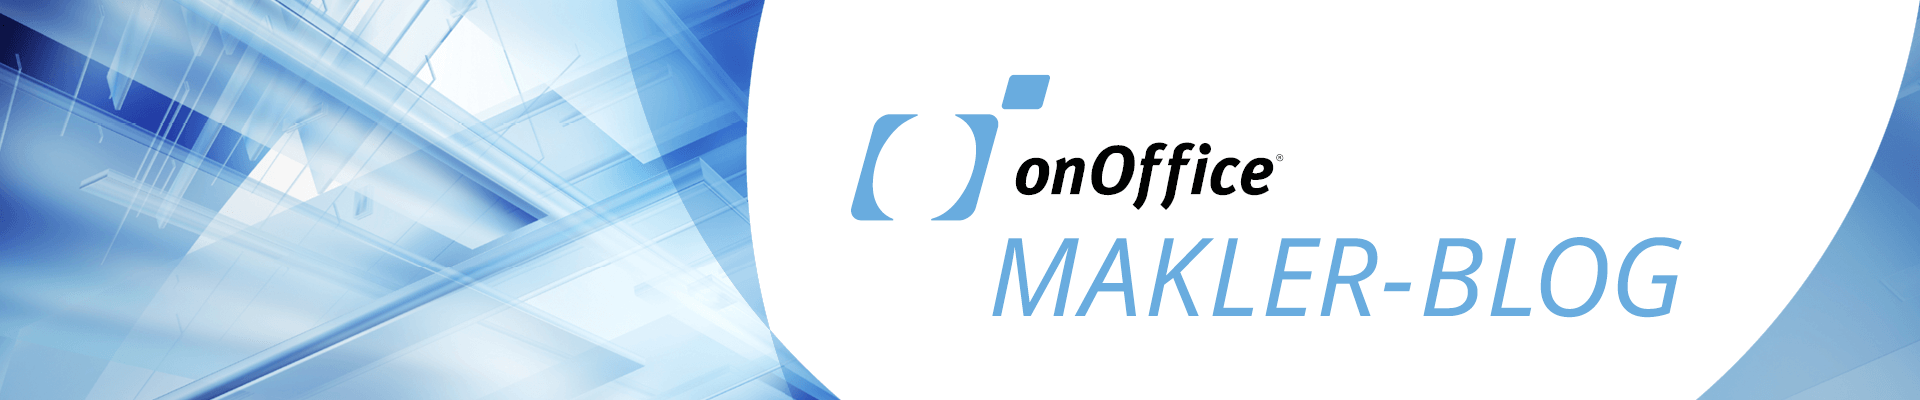 onOffice Maklerblog